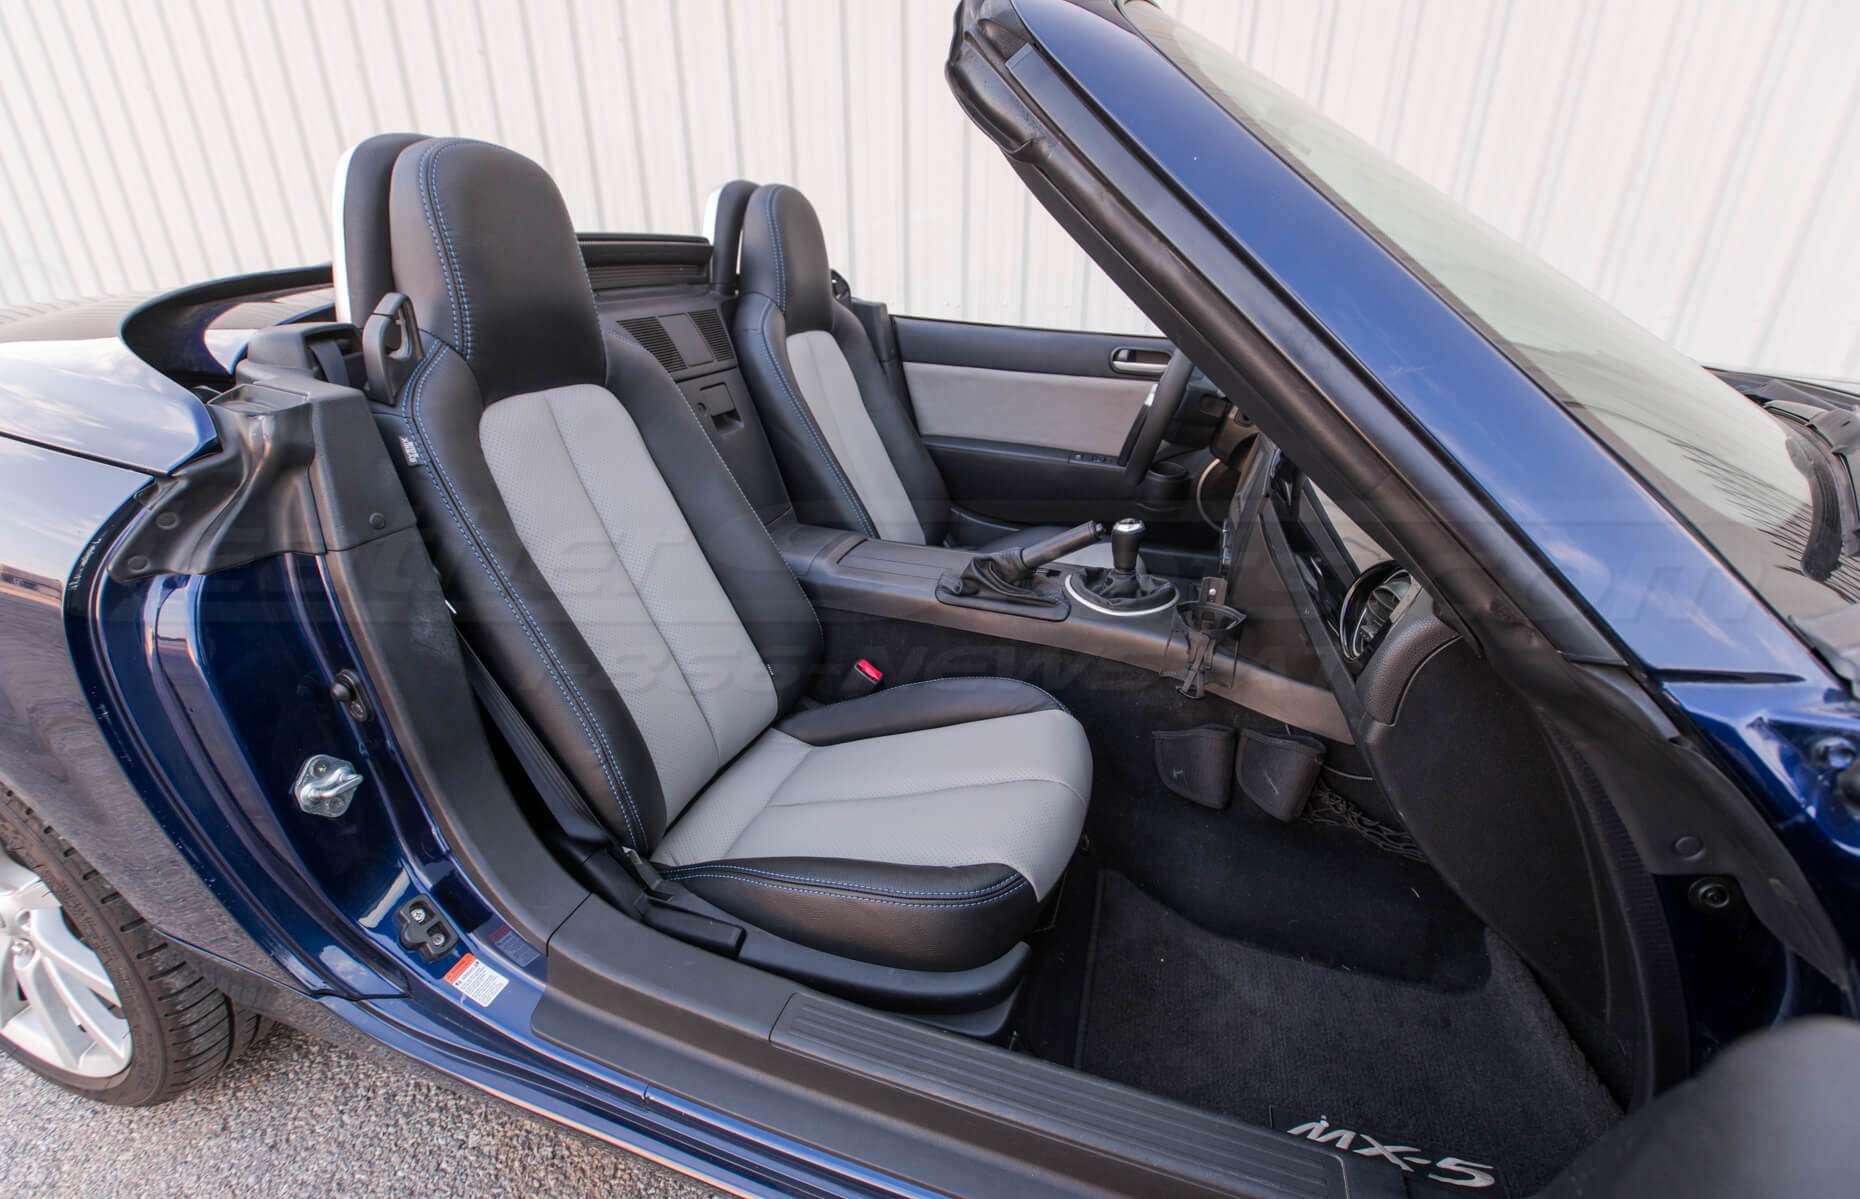 2006-2009 Mazda Miata Leather Seats - Passenger side exterior